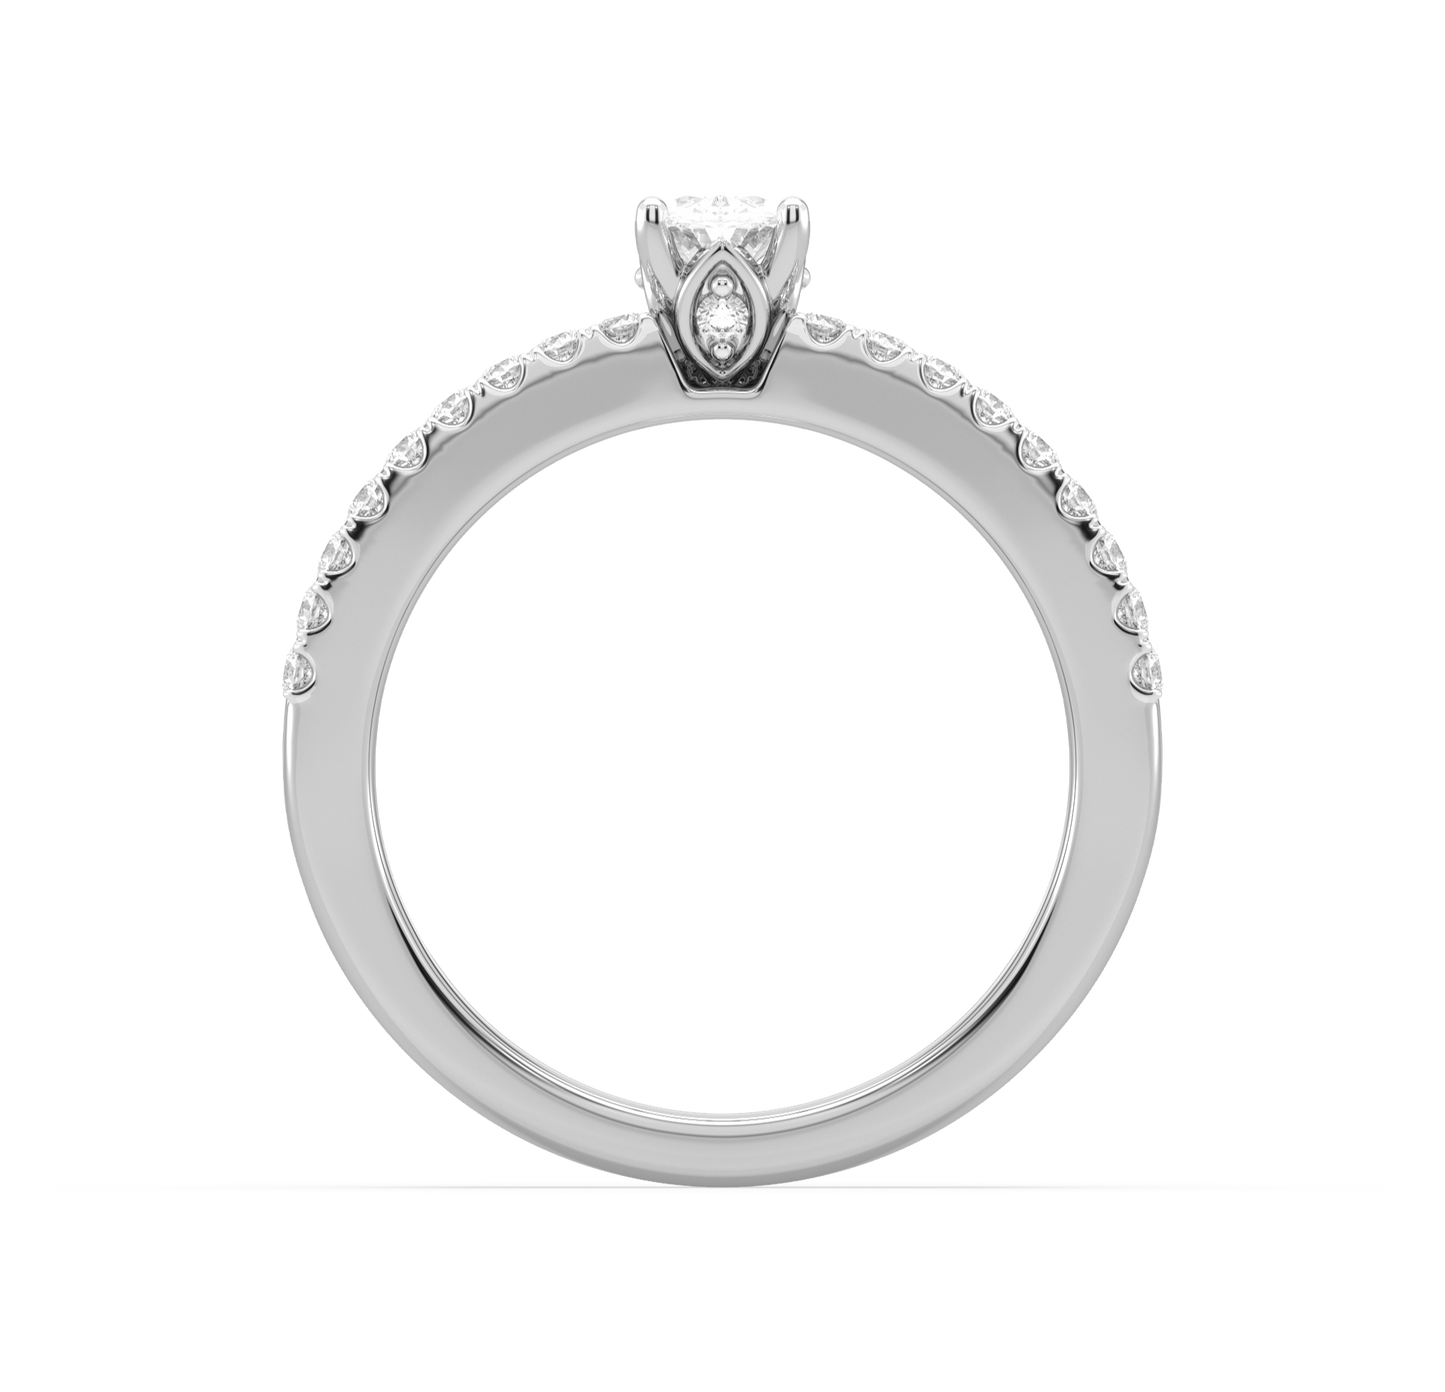 Customised ring RG21004-PH21026